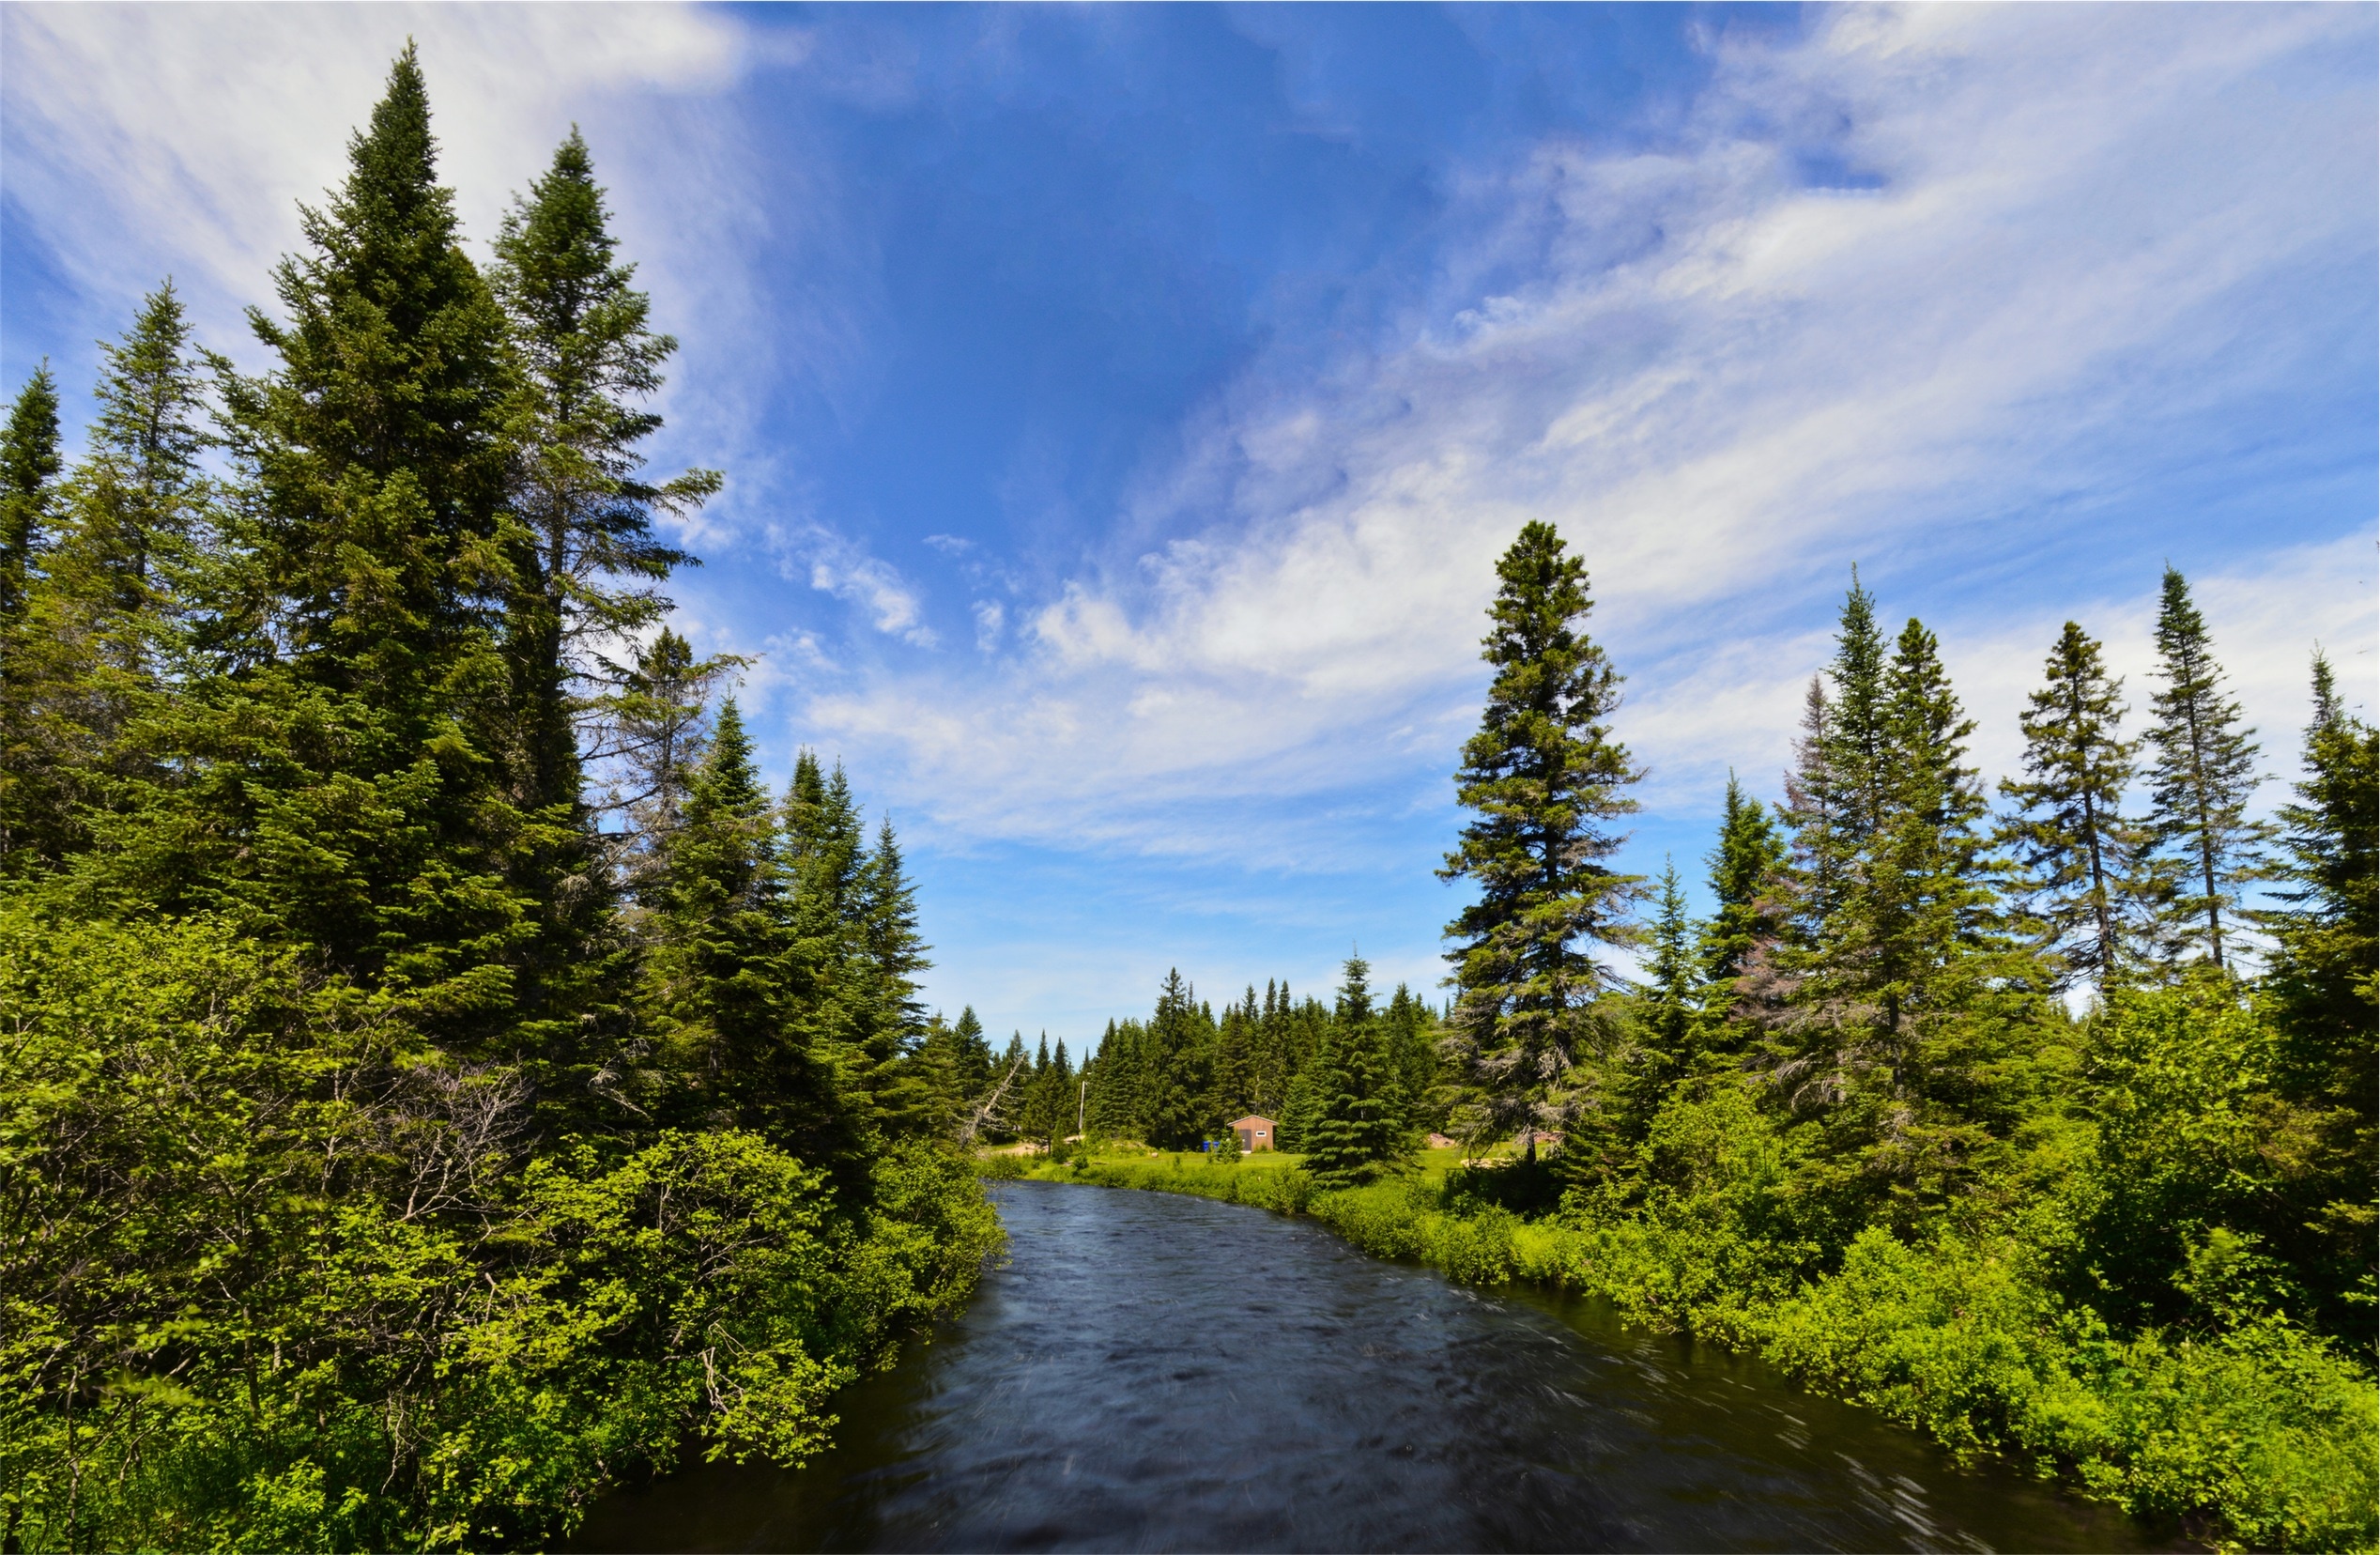 river between green pine trees